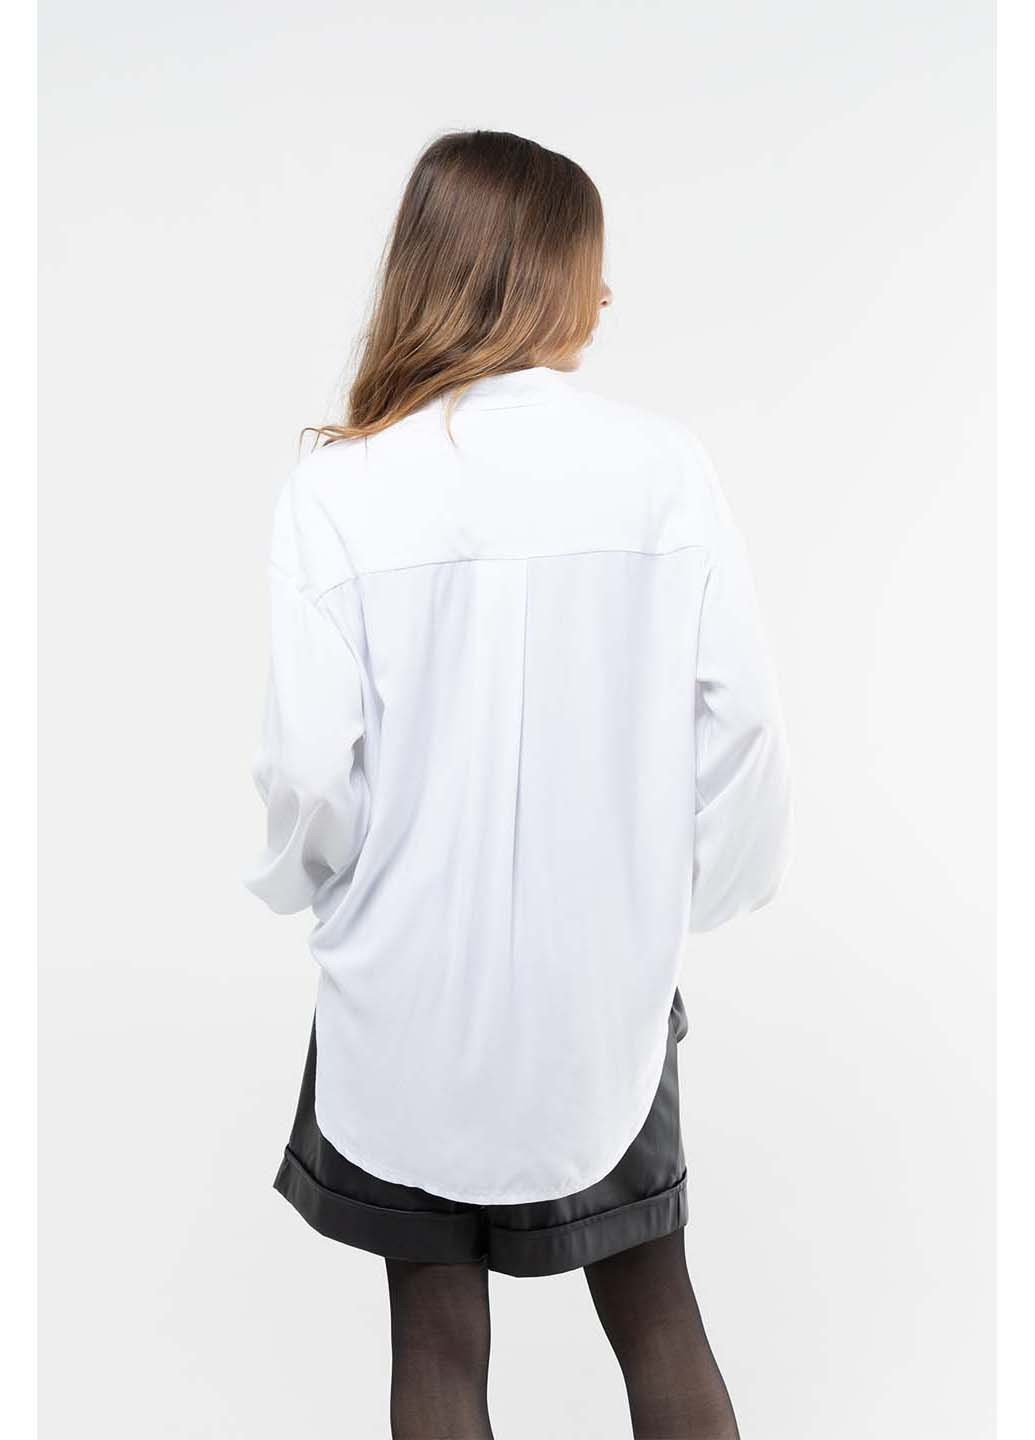 Белая демисезонная блузка Onme